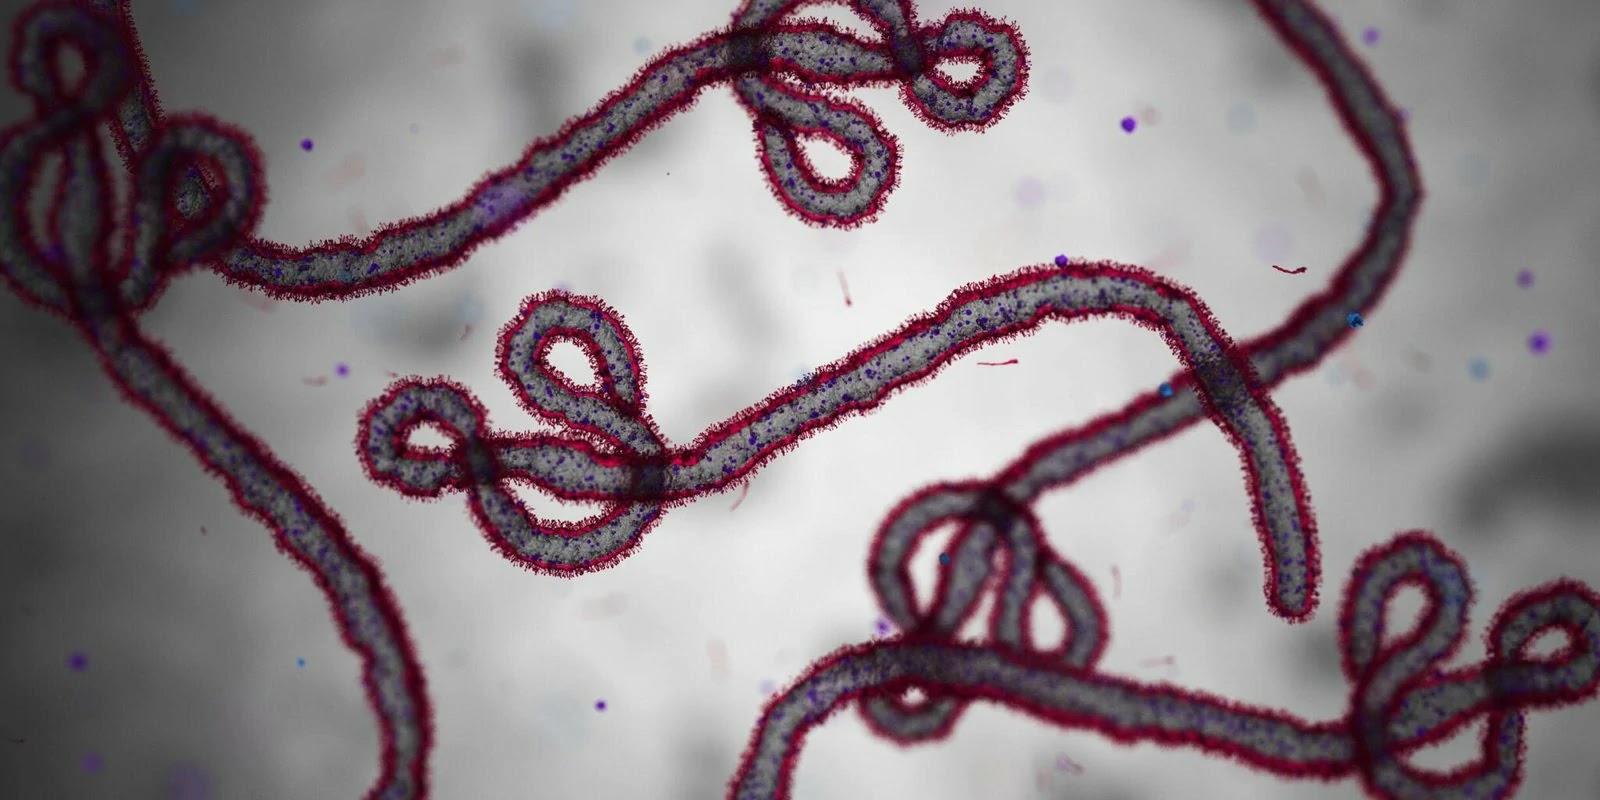 Ebola: The Nightmare Disease